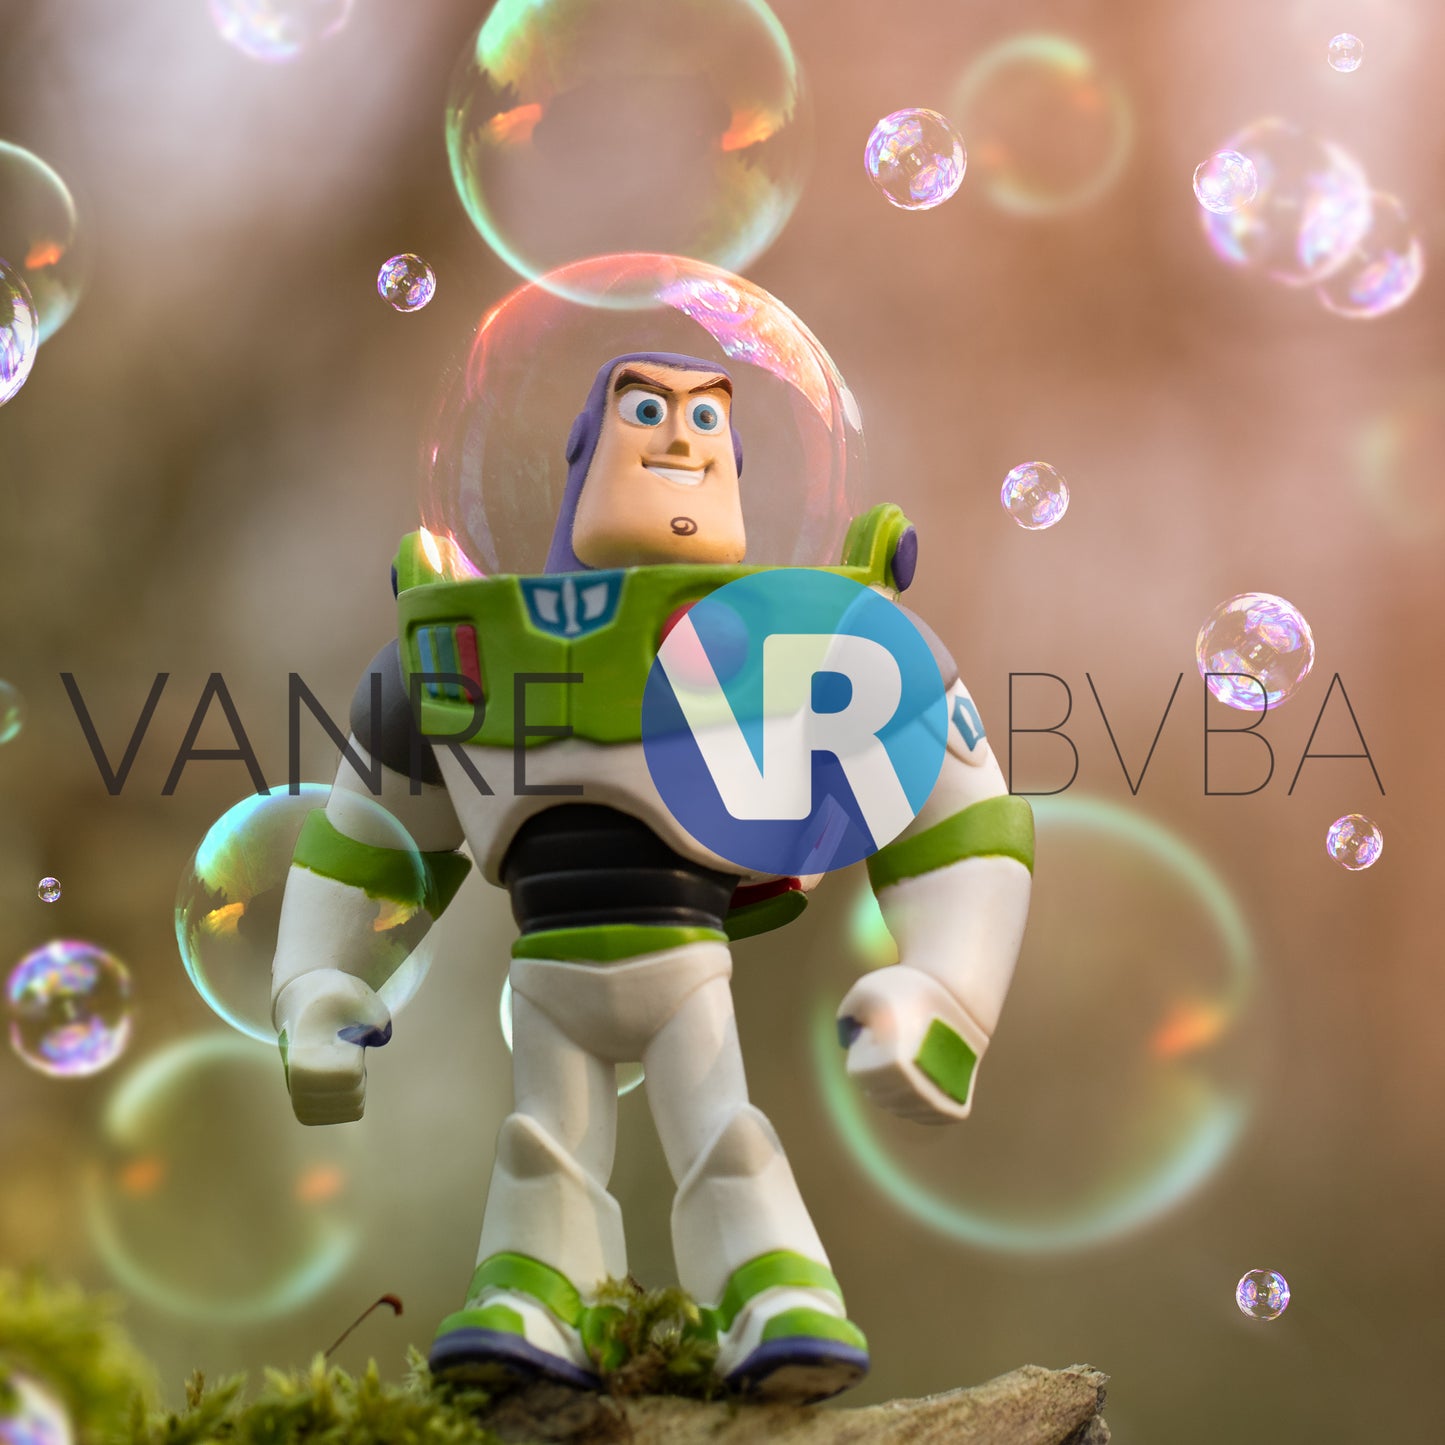 The Bubble Buzz